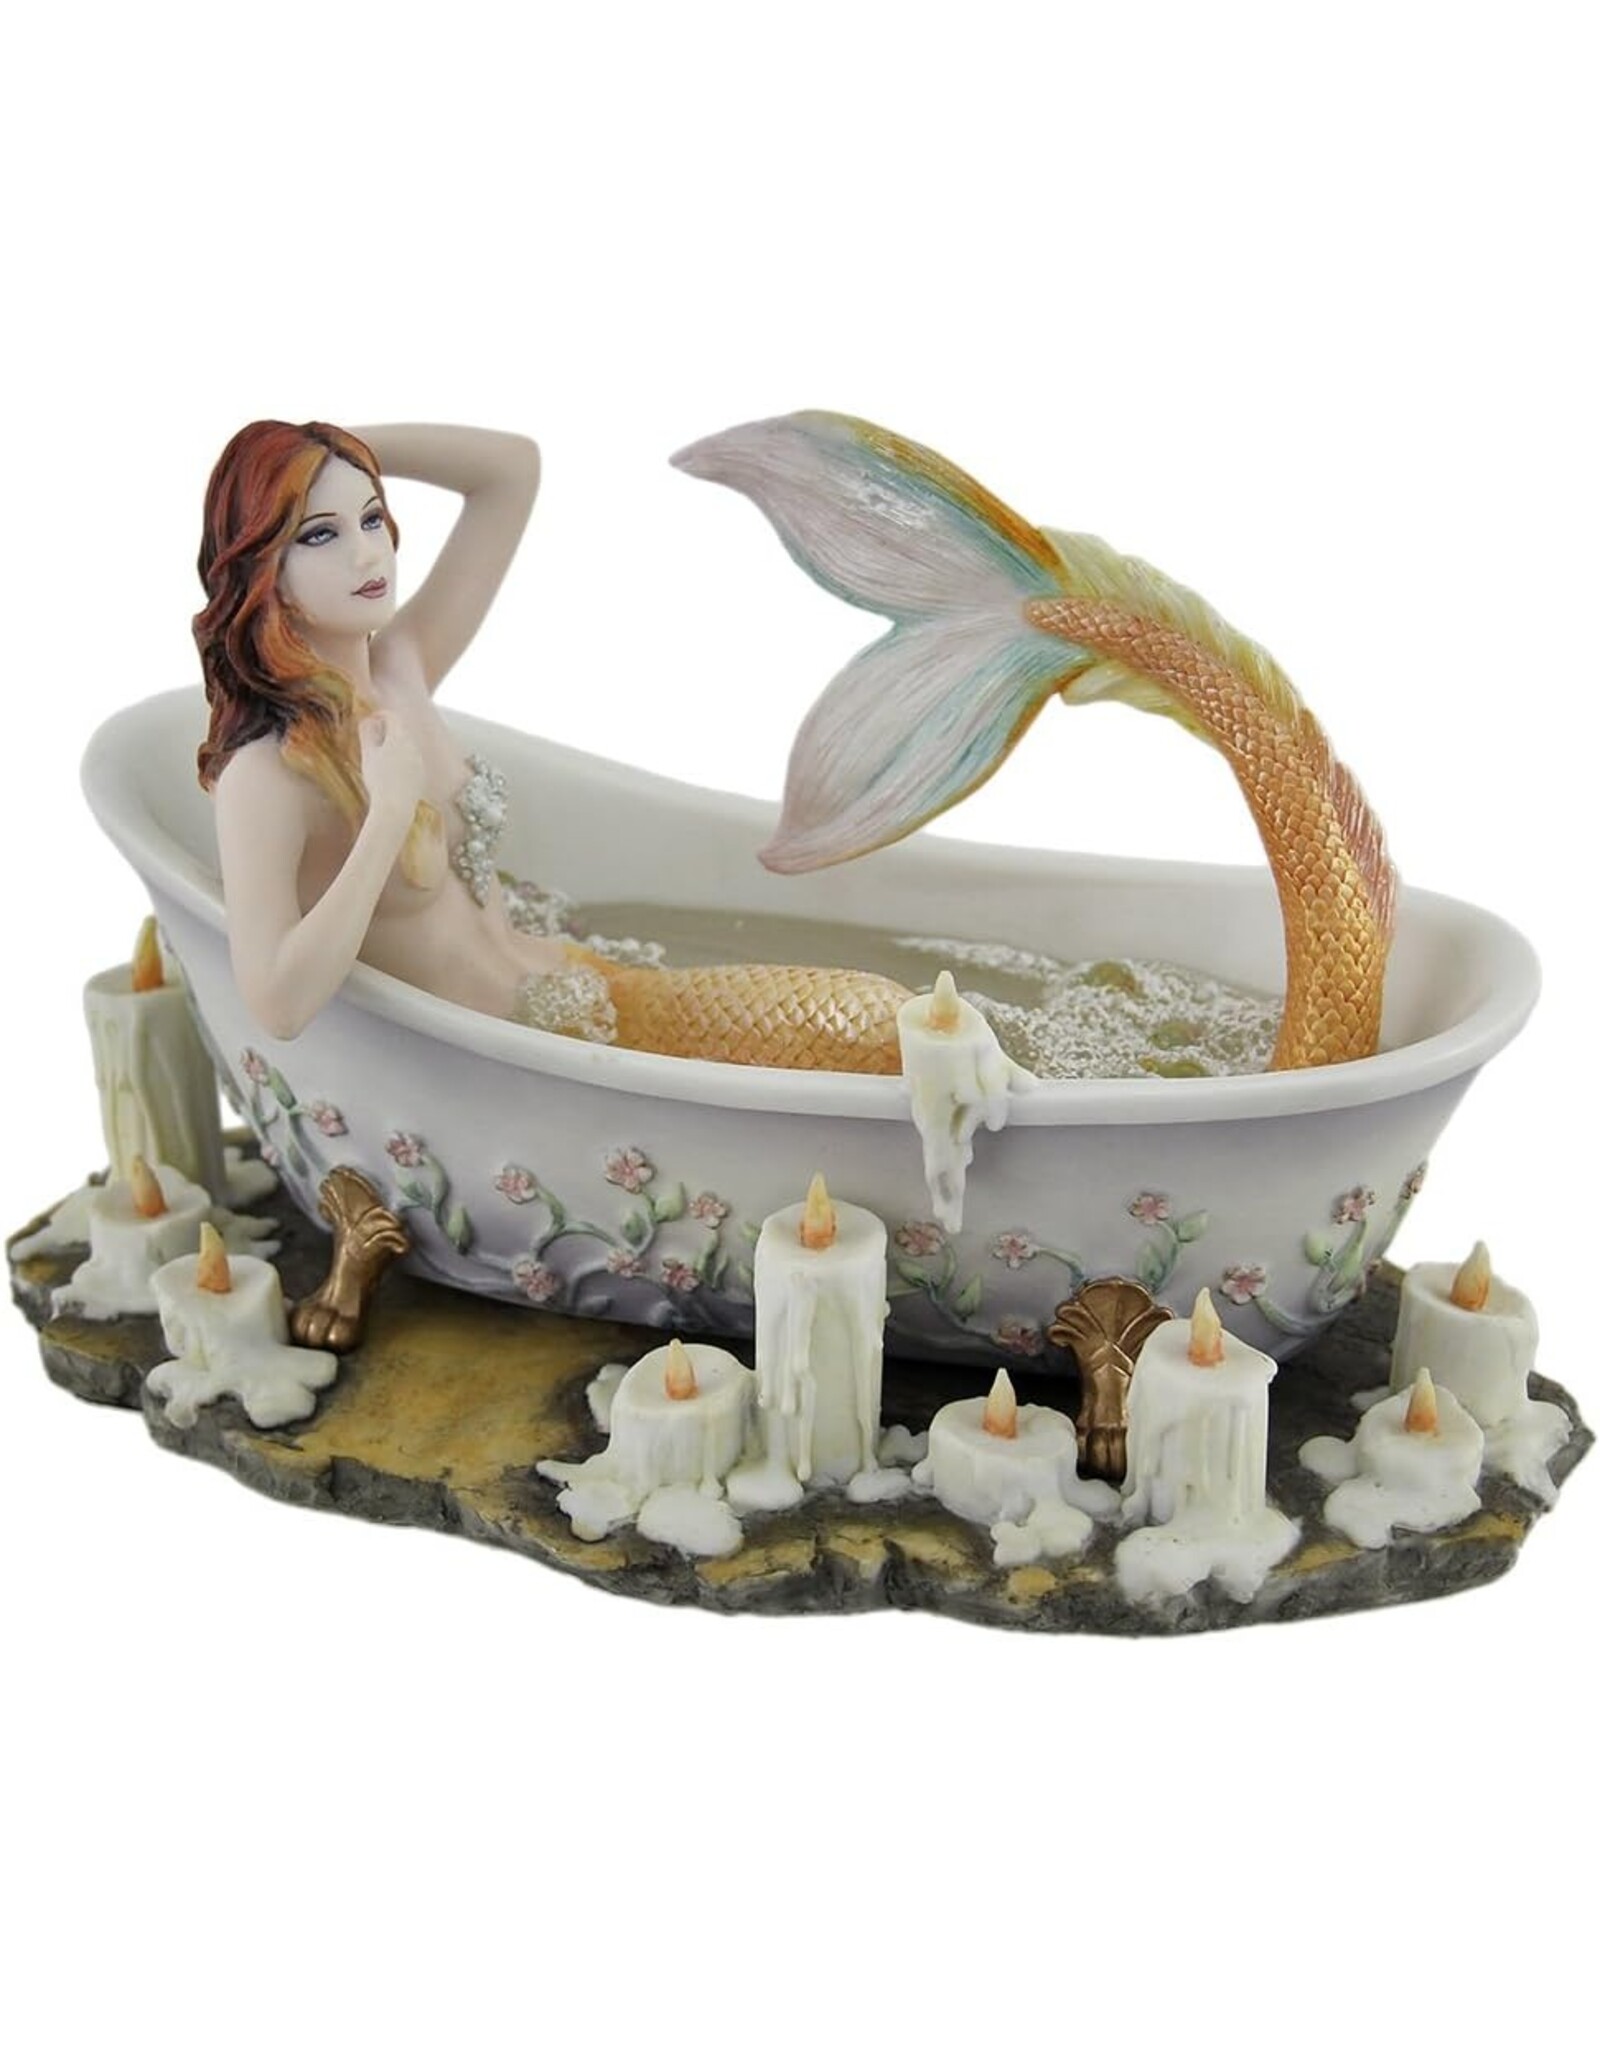 Veronese Design Giftware & Lifestyle - Bathtime by Selina Fenech - Mermaid in Bathtub